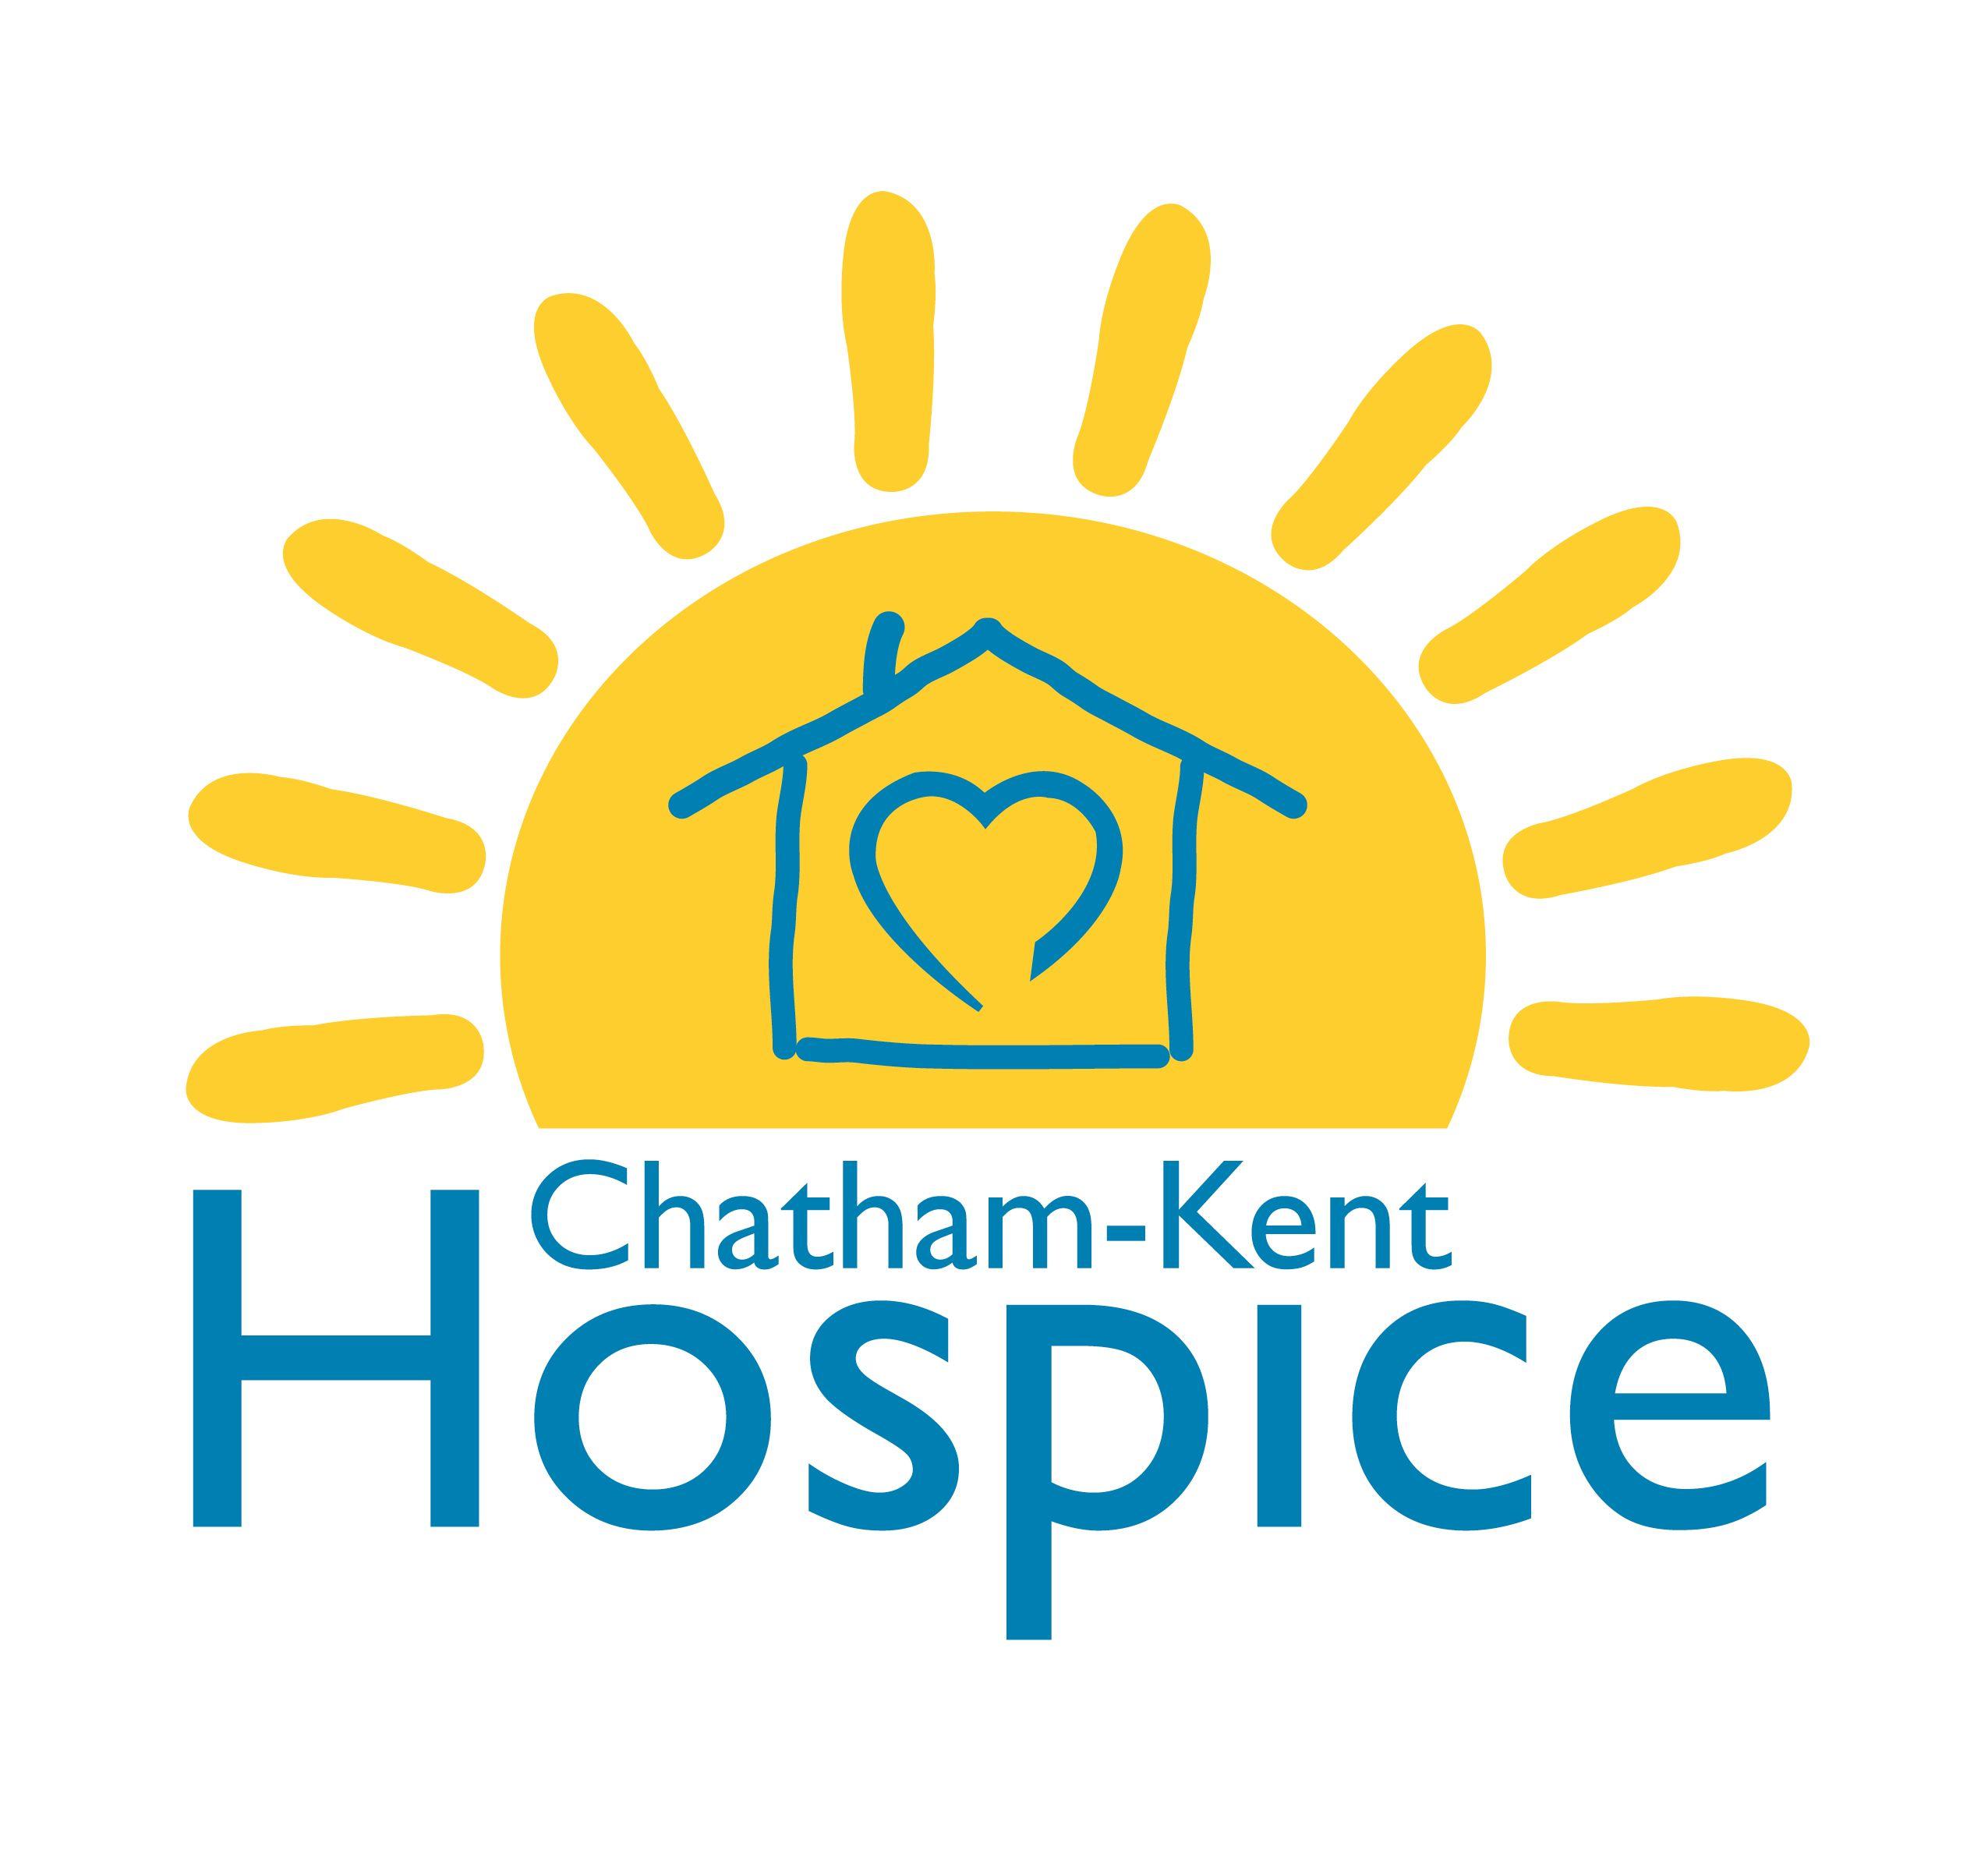 Chatham-Kent Logo - Hospice Education Campaign Kent Hospice